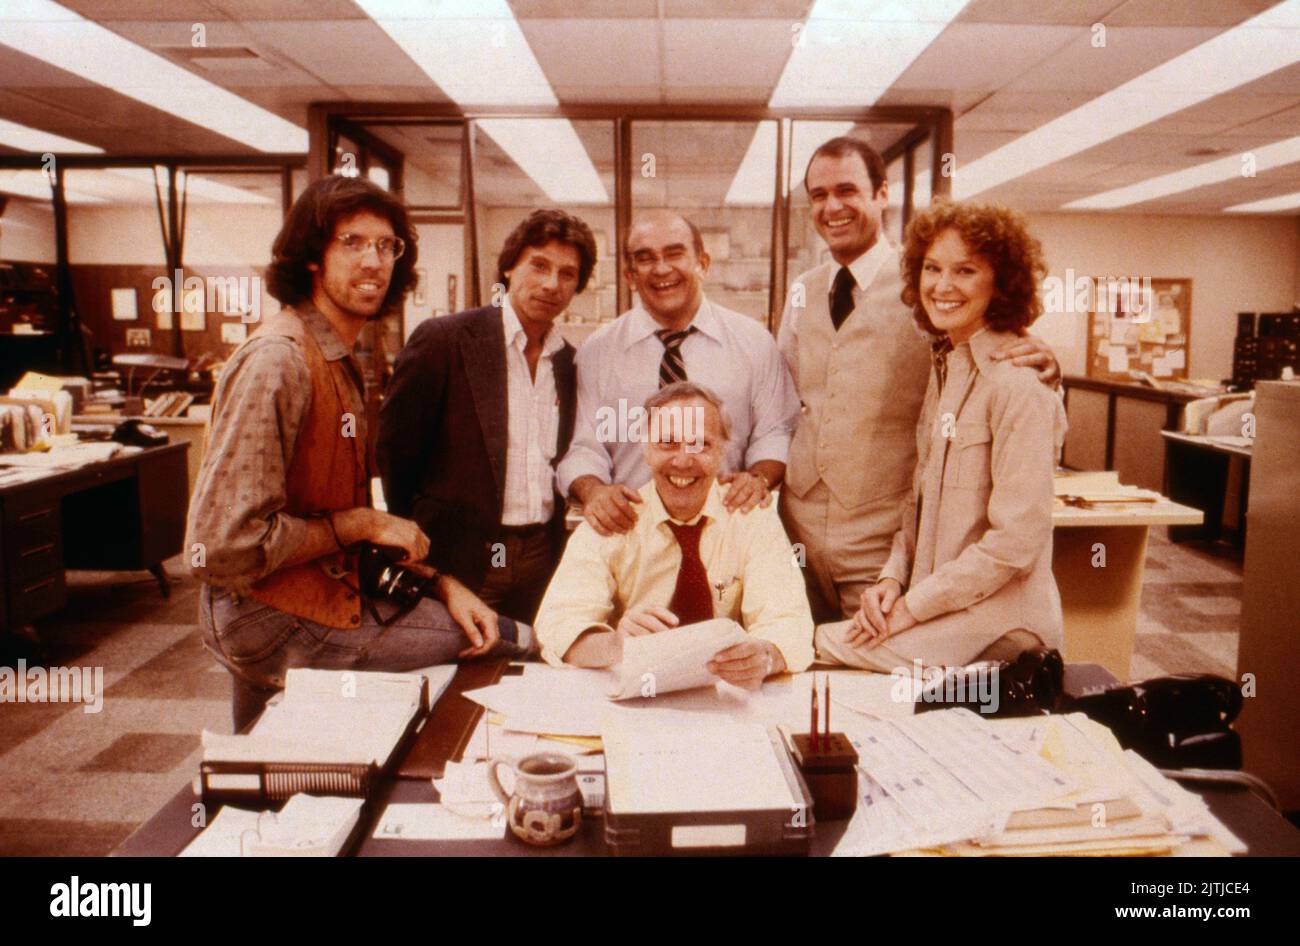 Lou Grant, Fernsehserie, USA 1977 - 1982, Darsteller: Daryl Anderson, Robert Walden, Edward Asner, Jack Bannon, Linda Kelsey, Mason Adams (sitzend) Foto Stock